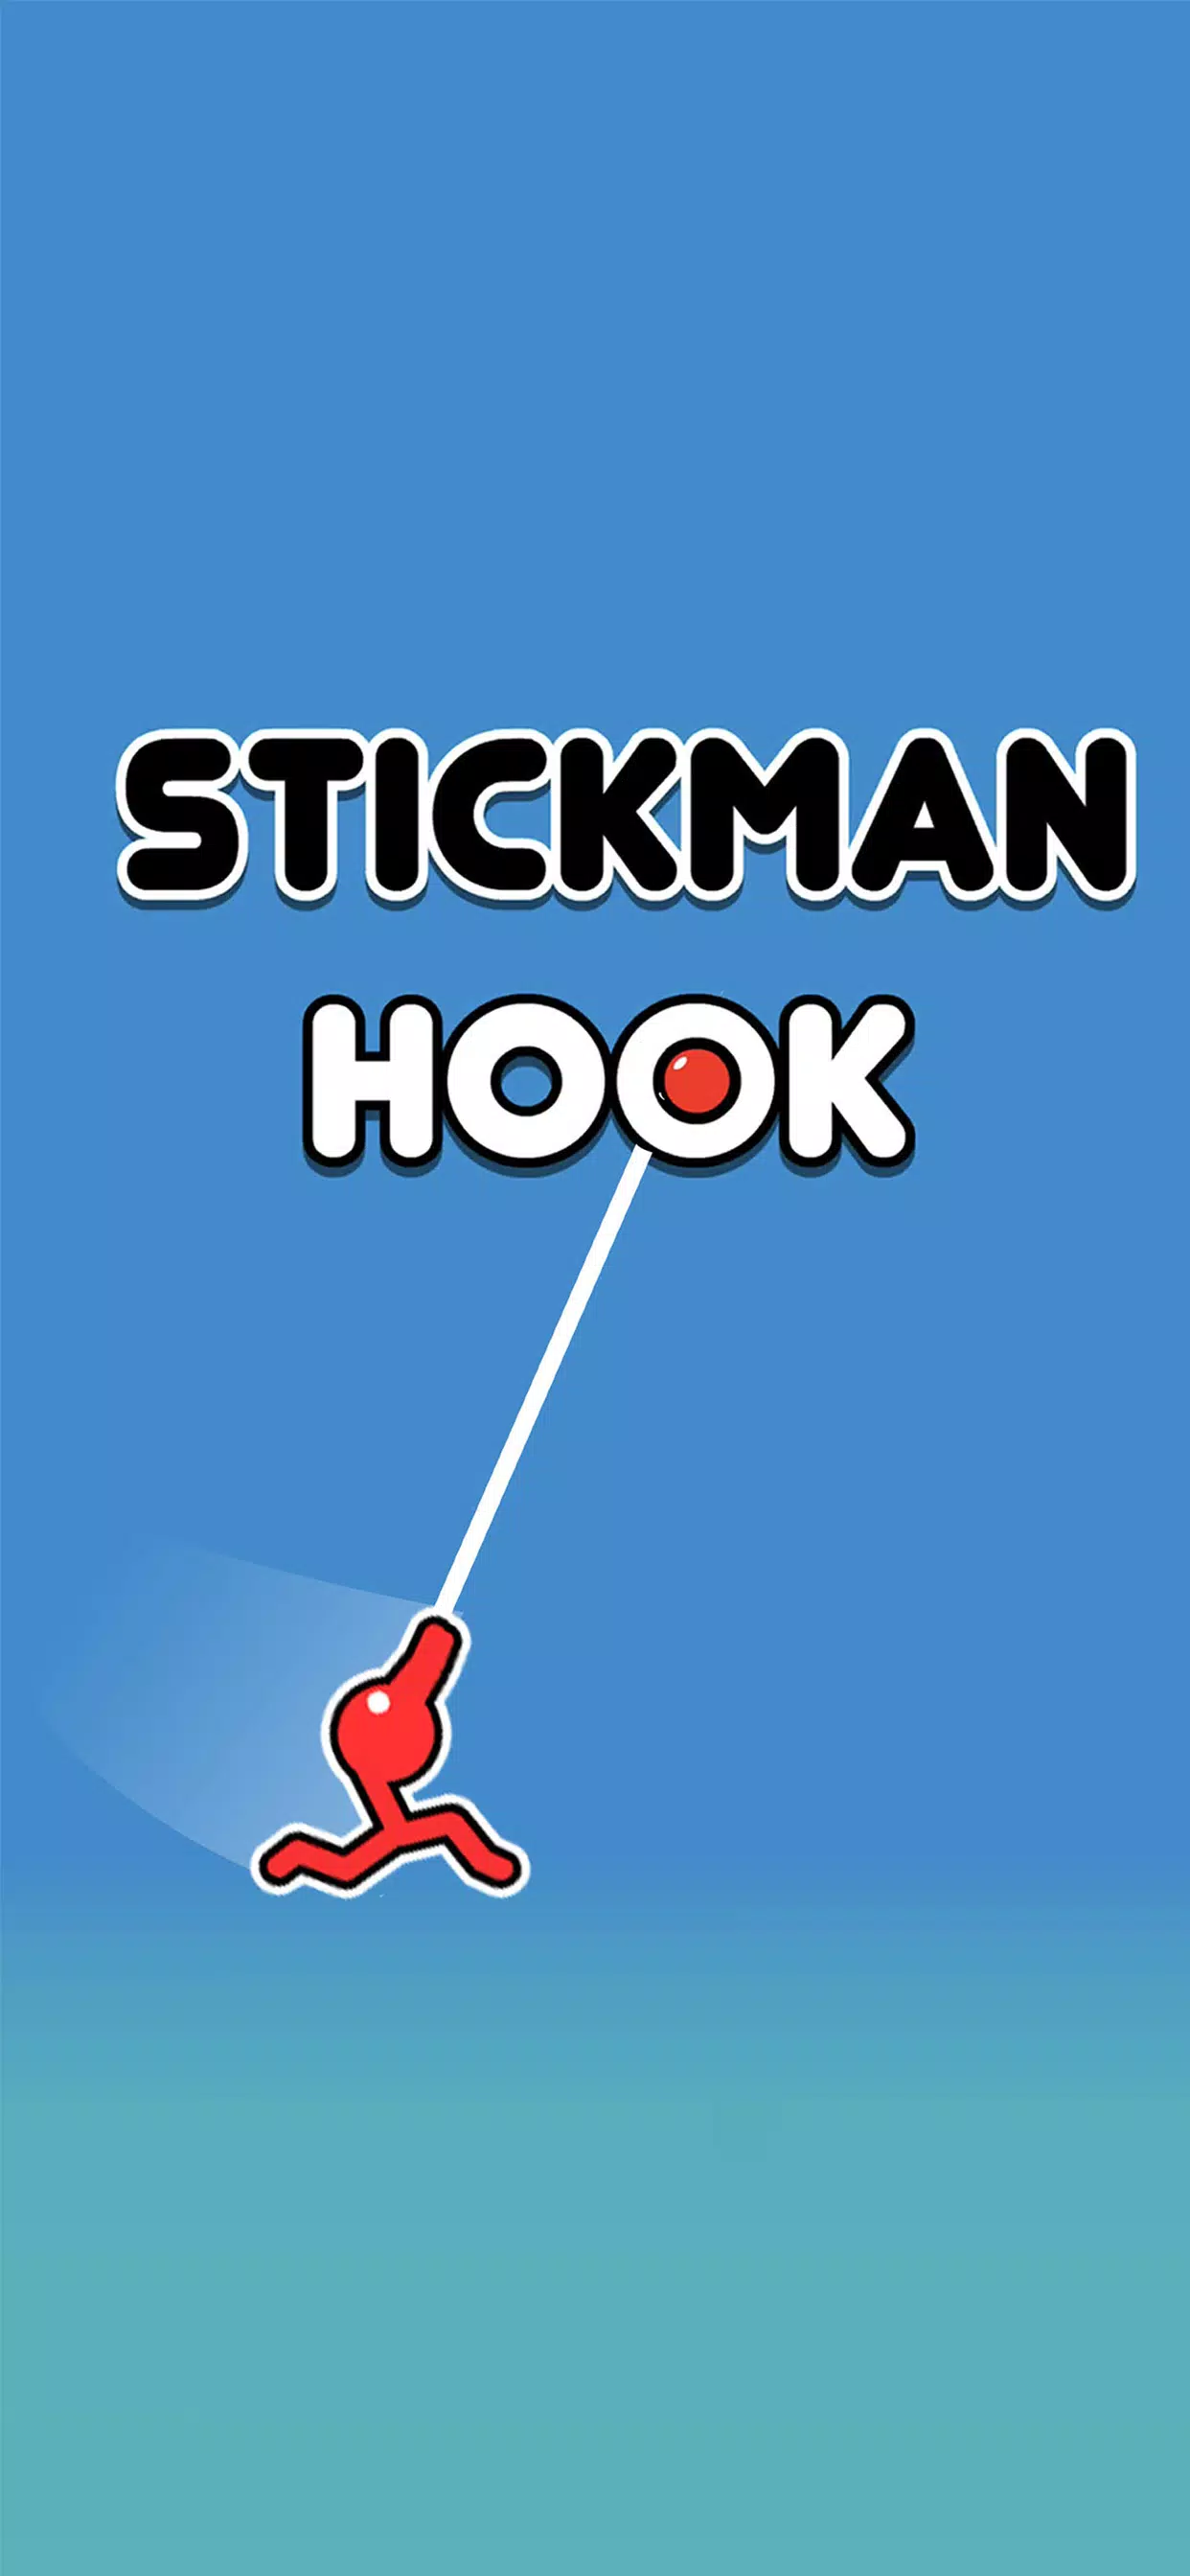 Download Stickman hook 3D Free for Android - Stickman hook 3D APK